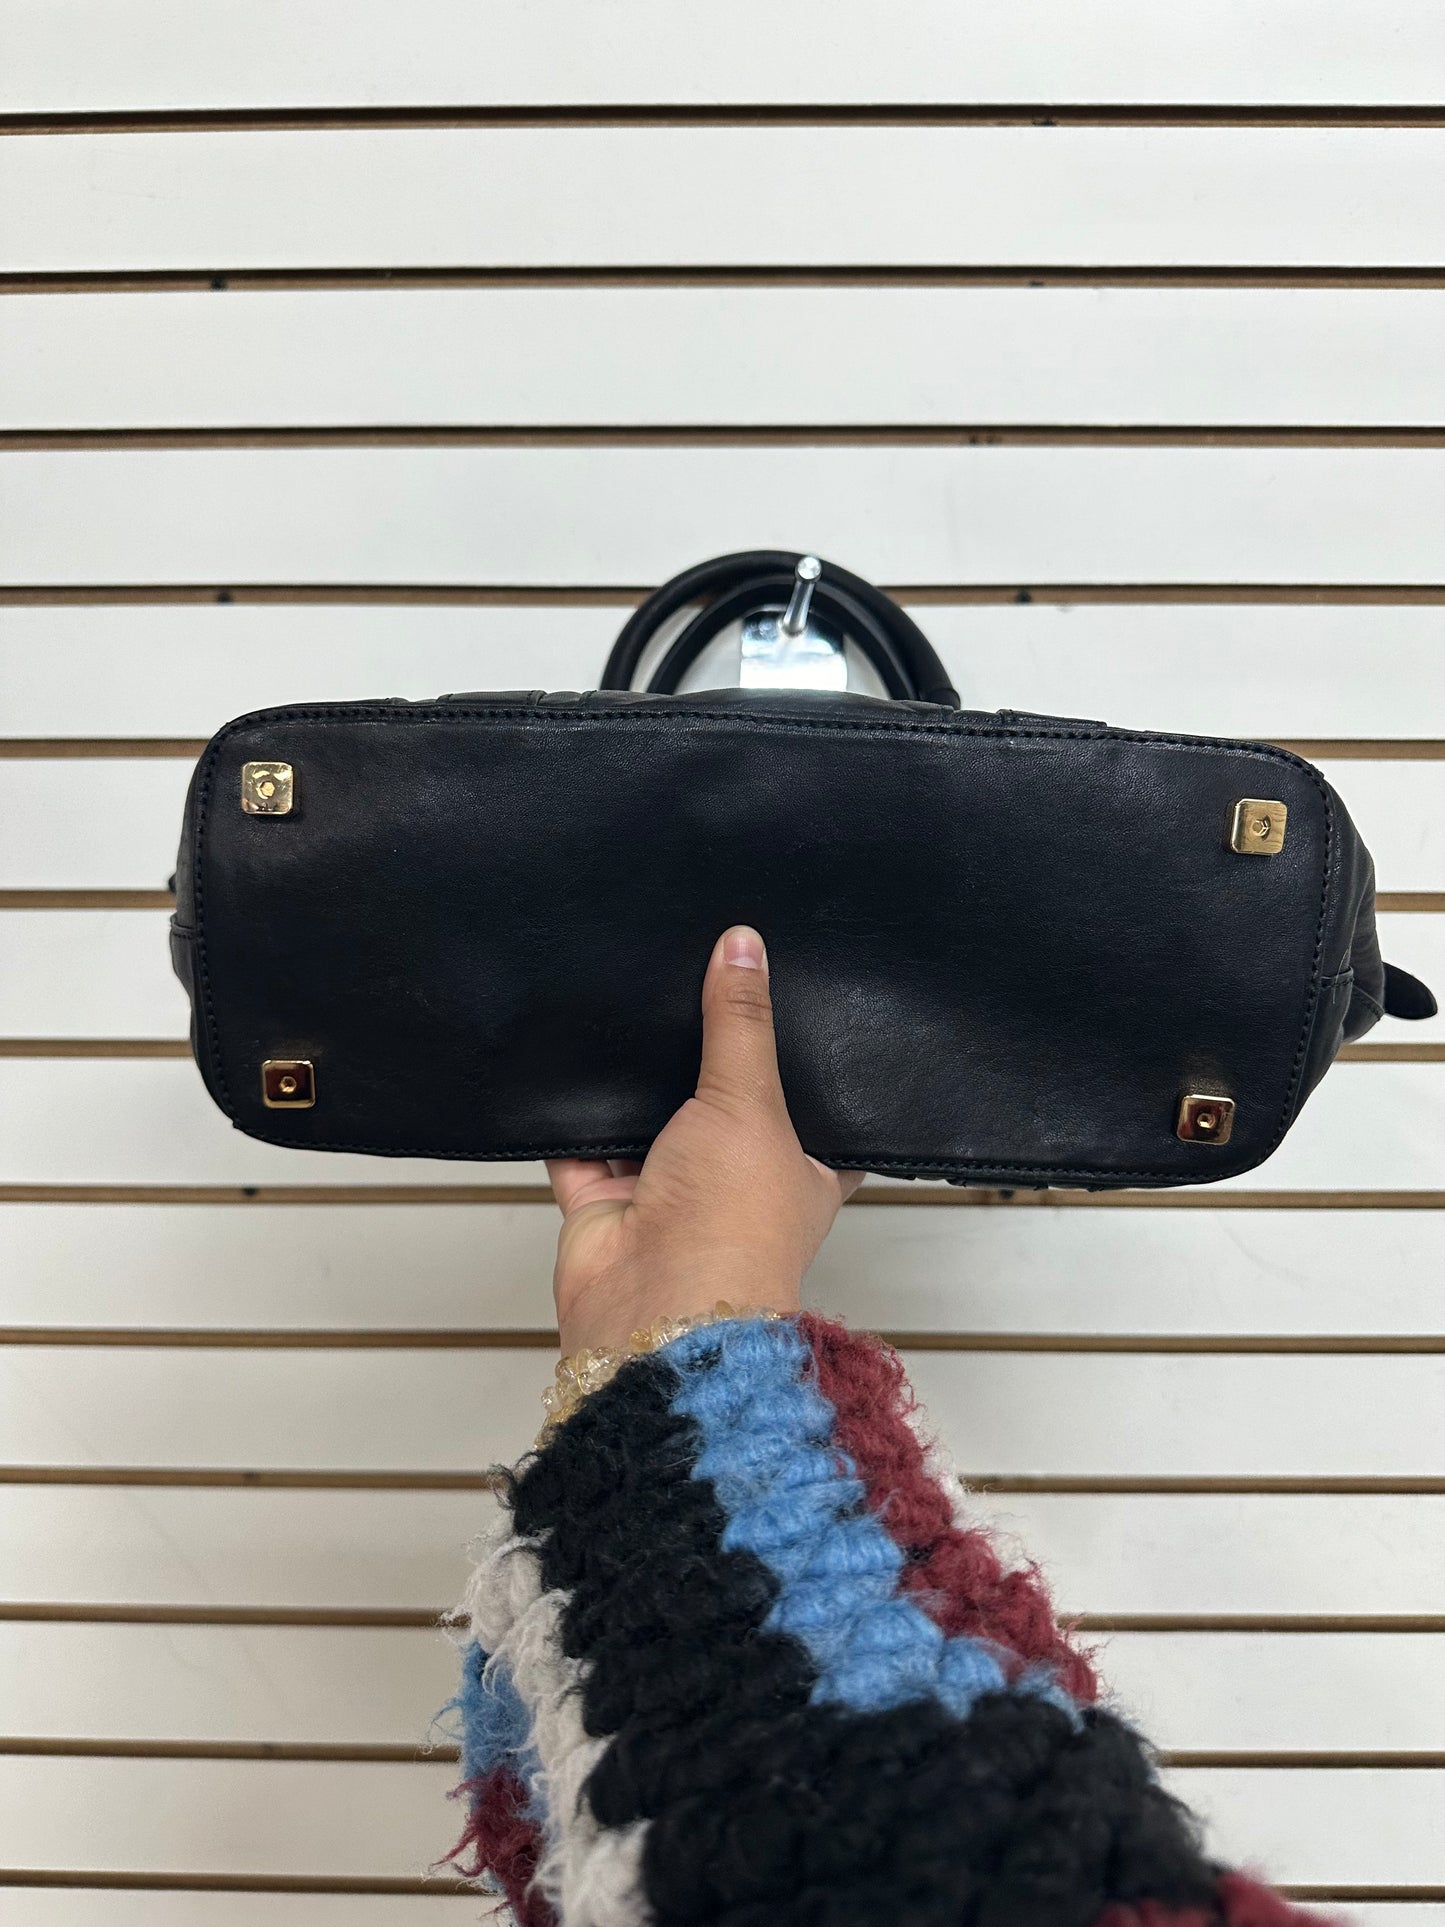 Handbag Leather By Rachel Zoe  Size: Medium